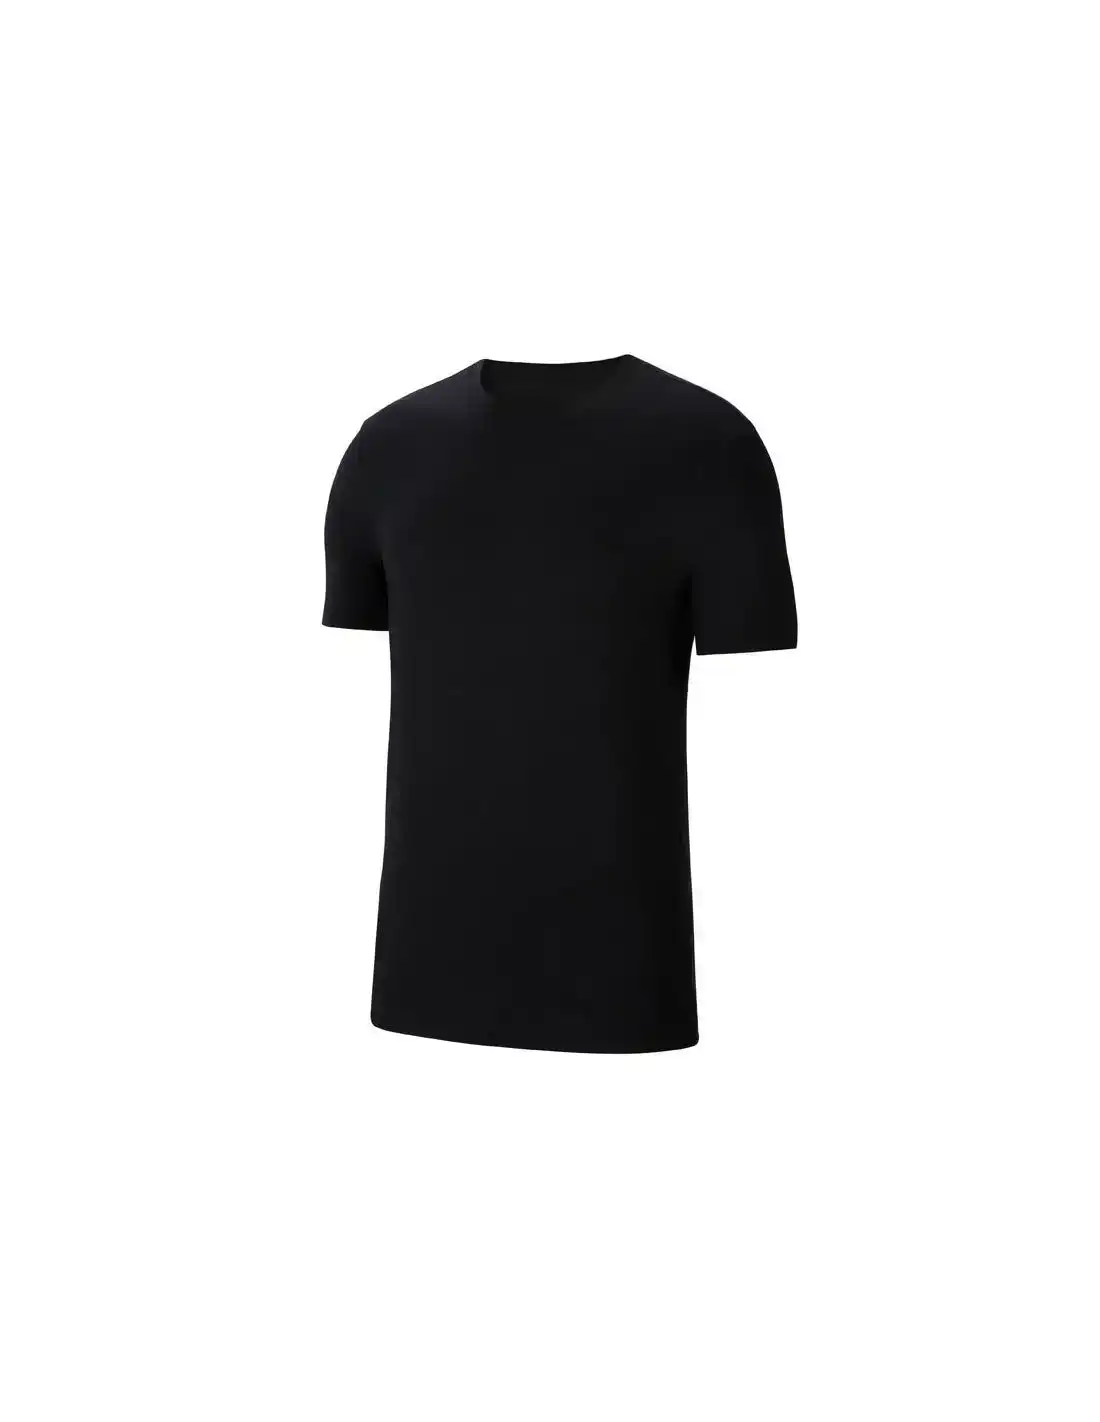 4 x Nike Park 20 T-Shirt Training Athletic Sportswear Black